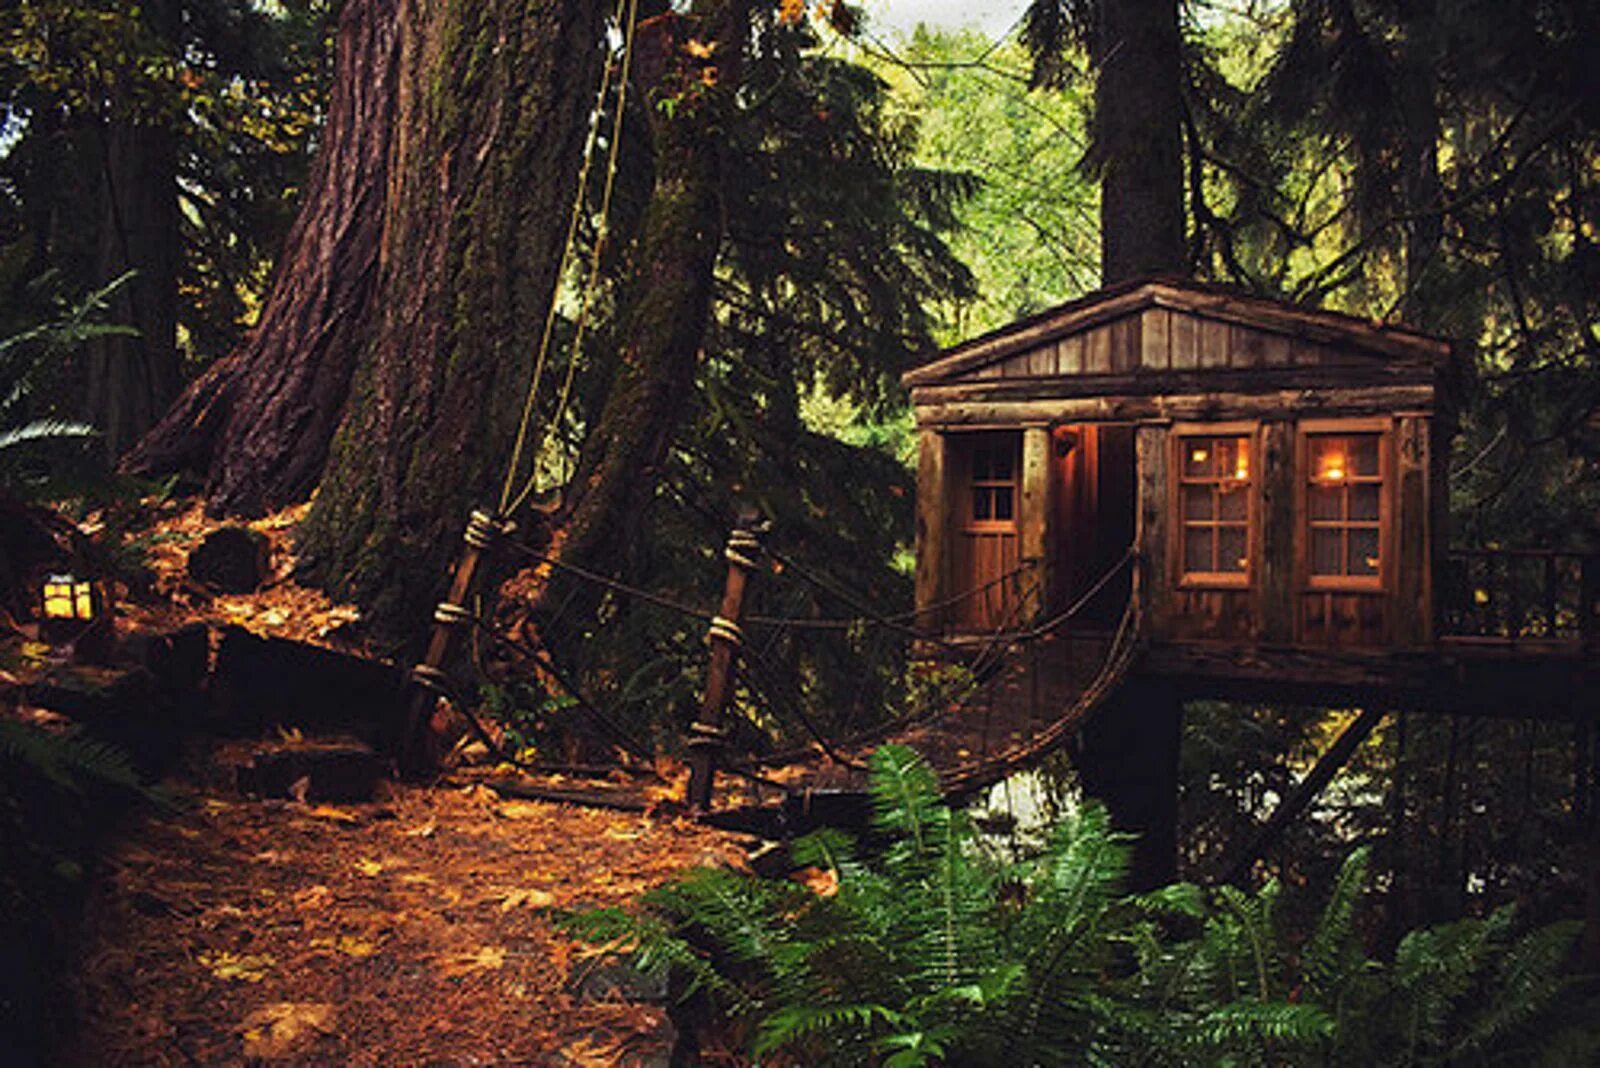 Дом на дереве (Британская Колумбия, Канада). Хижина гномов, Британская Колумбия. Друскининкай лес избушка. Домик на дереве Форест. Лес живой дом